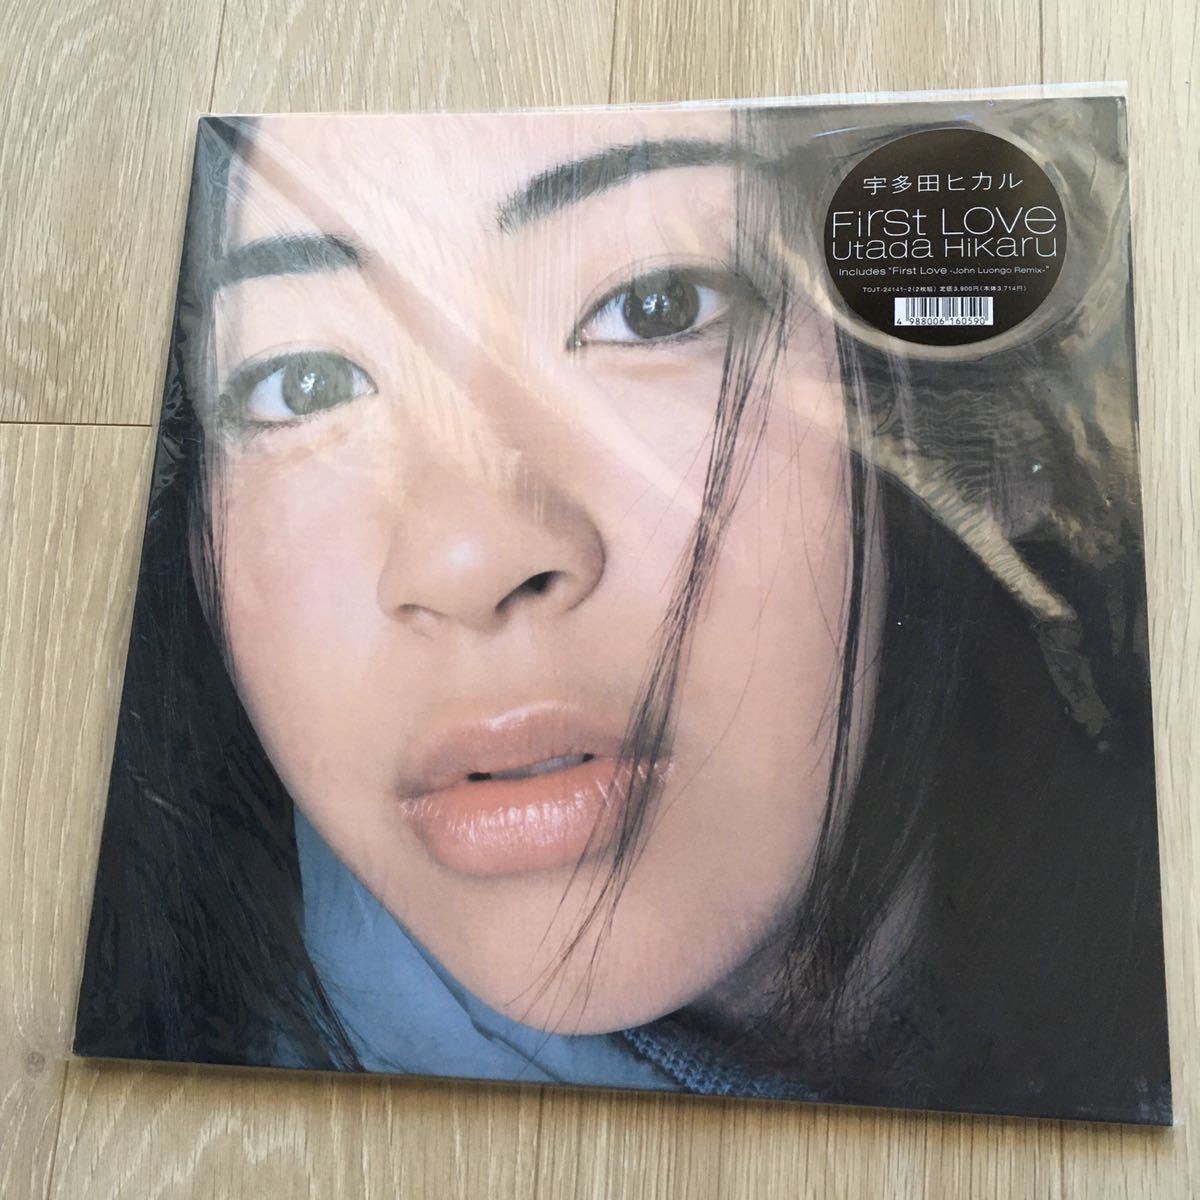 LPアナログレコード 宇多田ヒカル / First Love オリジナル盤 初期 